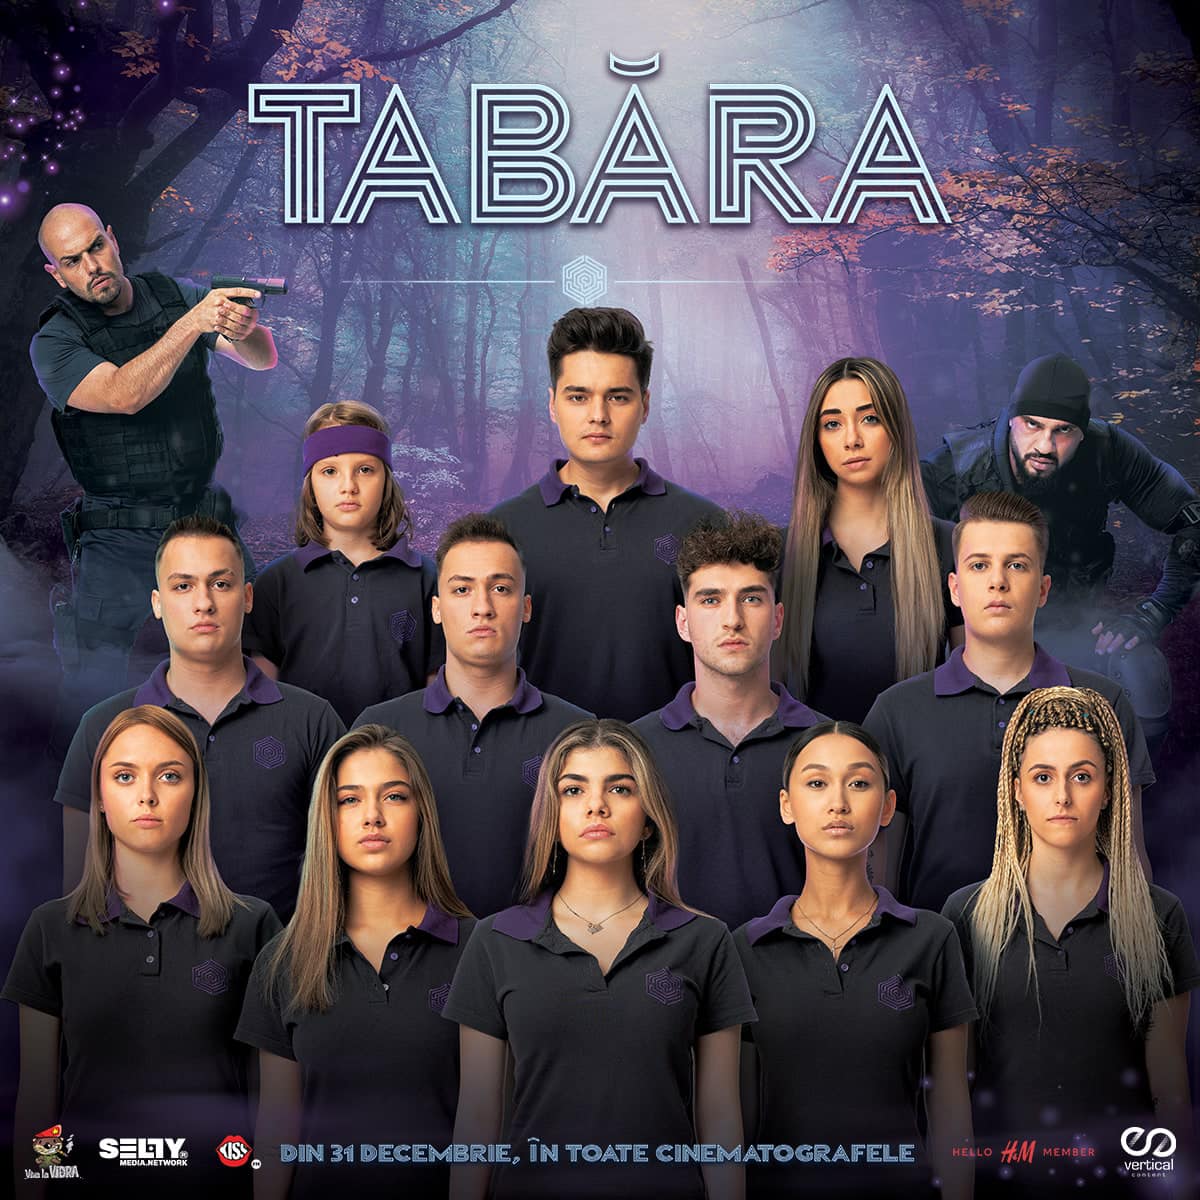 Tabara poster 2021